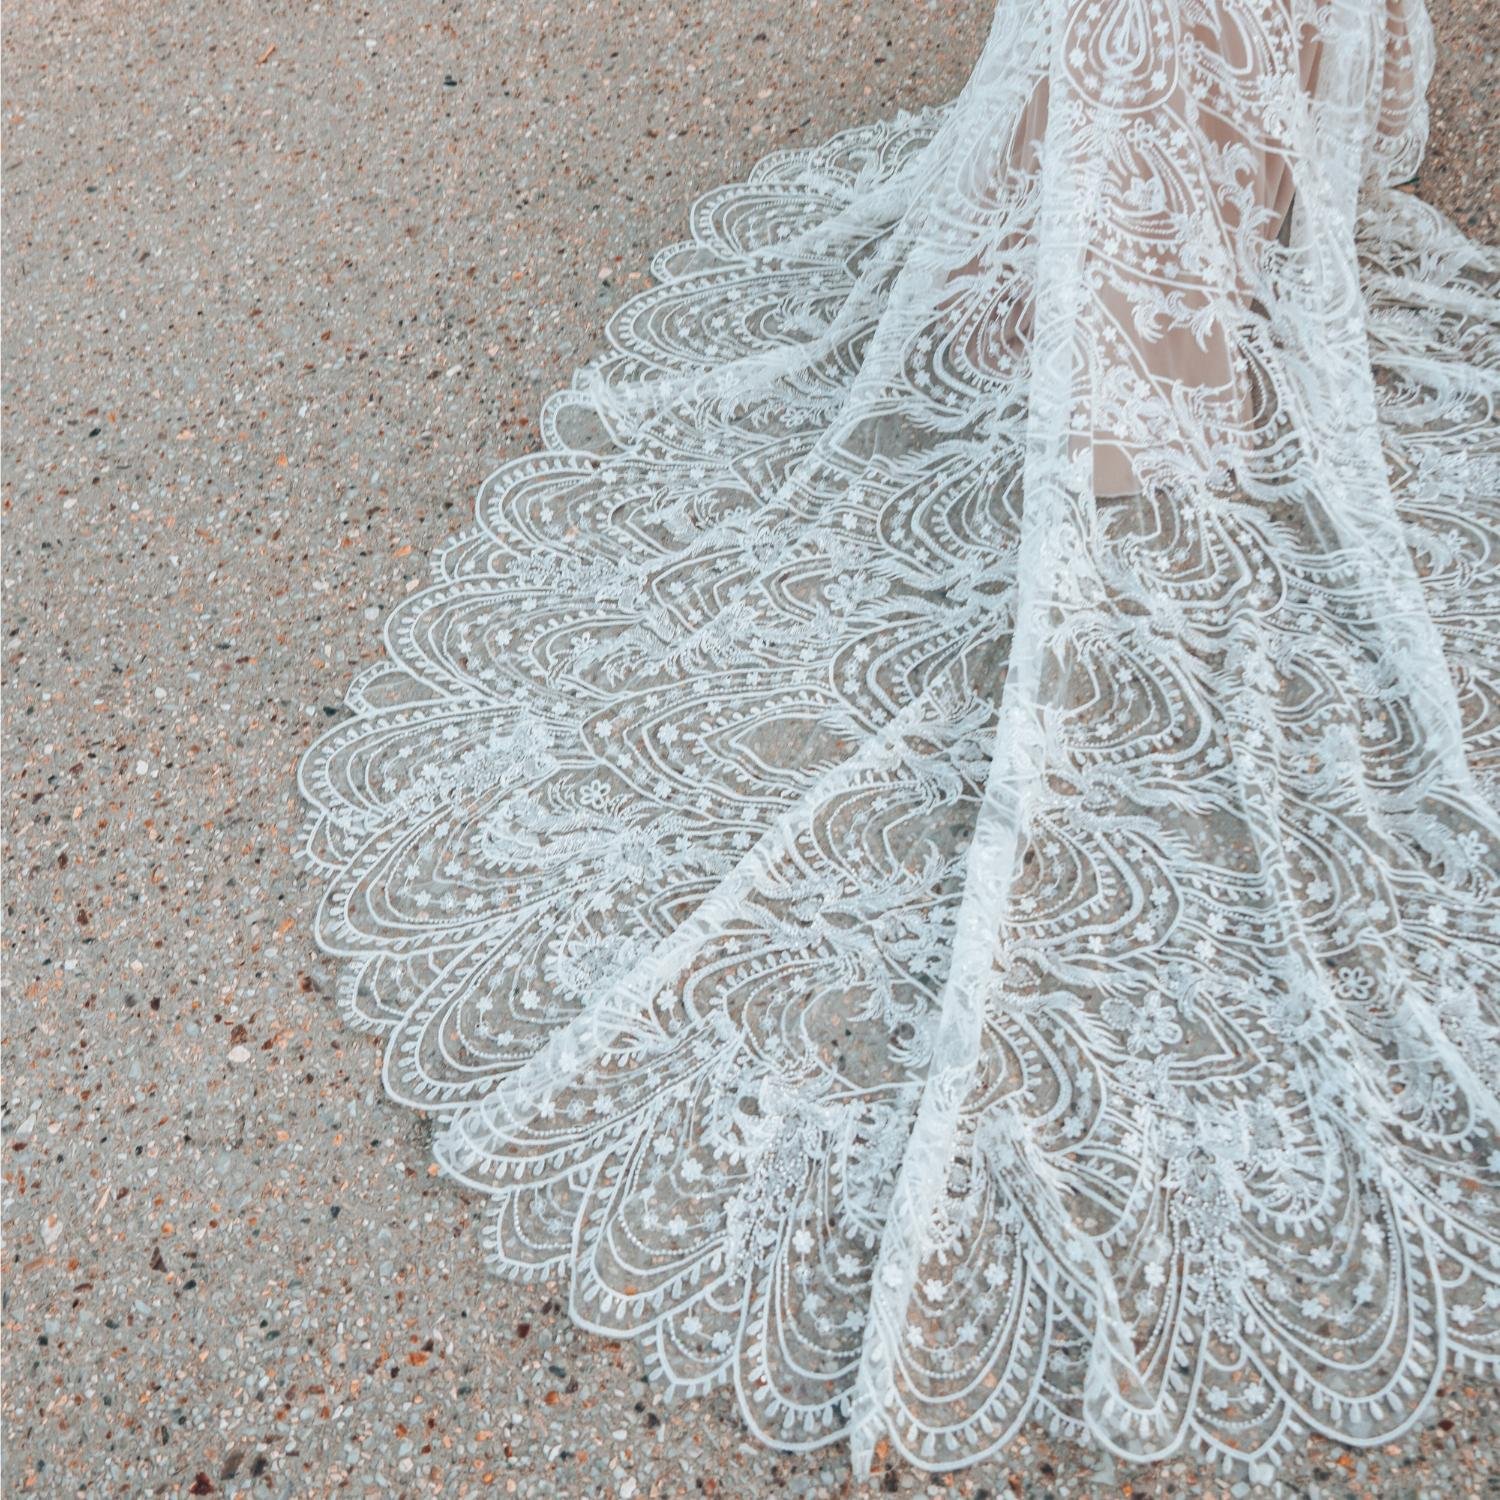 Jasmine wedding dress by Rachel Rose Bridal 